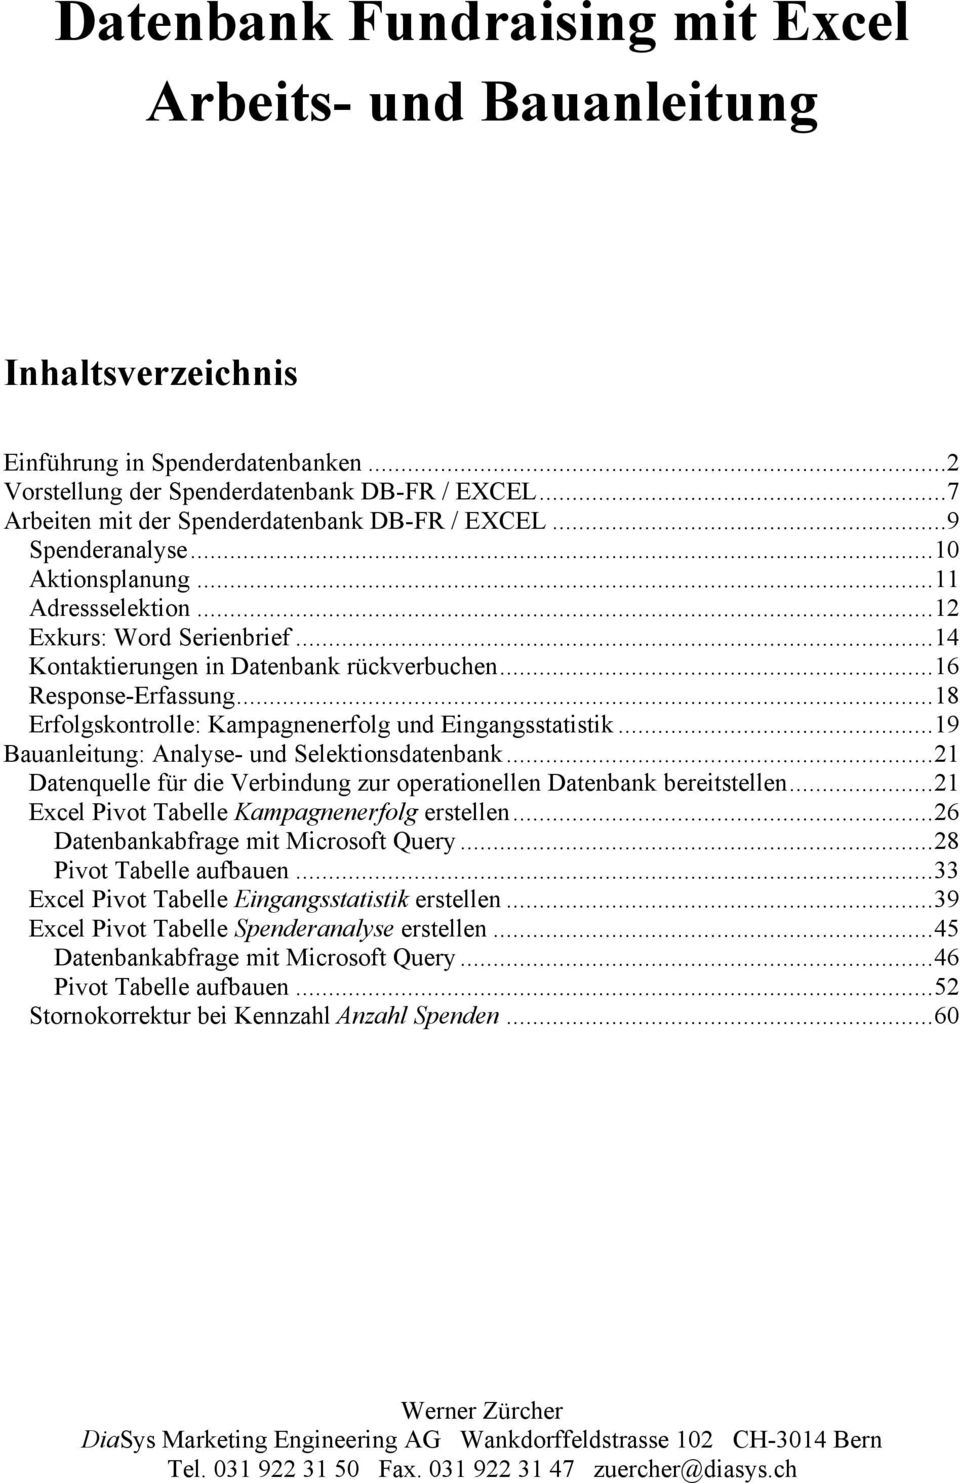 ..16 Response-Erfassung...18 Erfolgskontrolle: Kampagnenerfolg und Eingangsstatistik...19 Bauanleitung: Analyse- und Selektionsdatenbank.